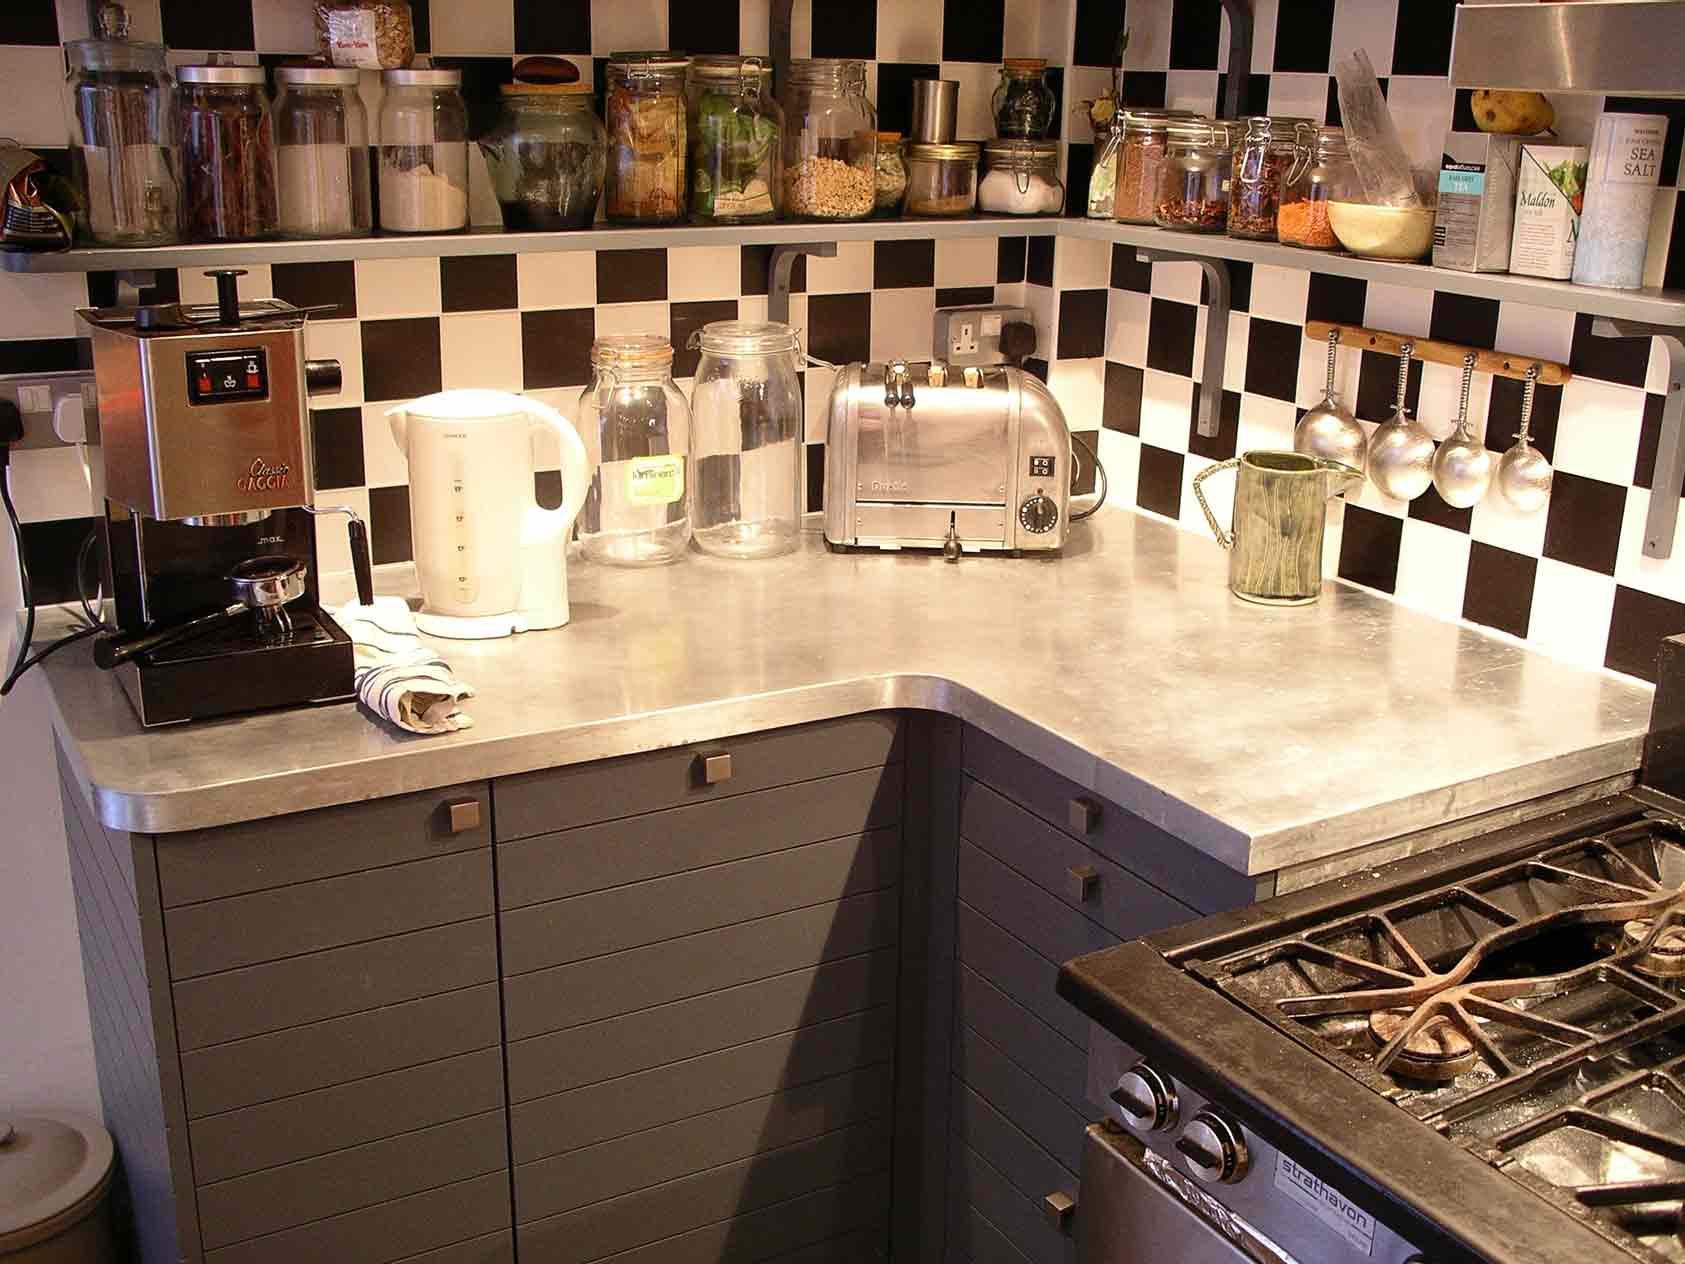 bespoke kitchen cabinets with horizontal slatted doors and custom made zinc worktop